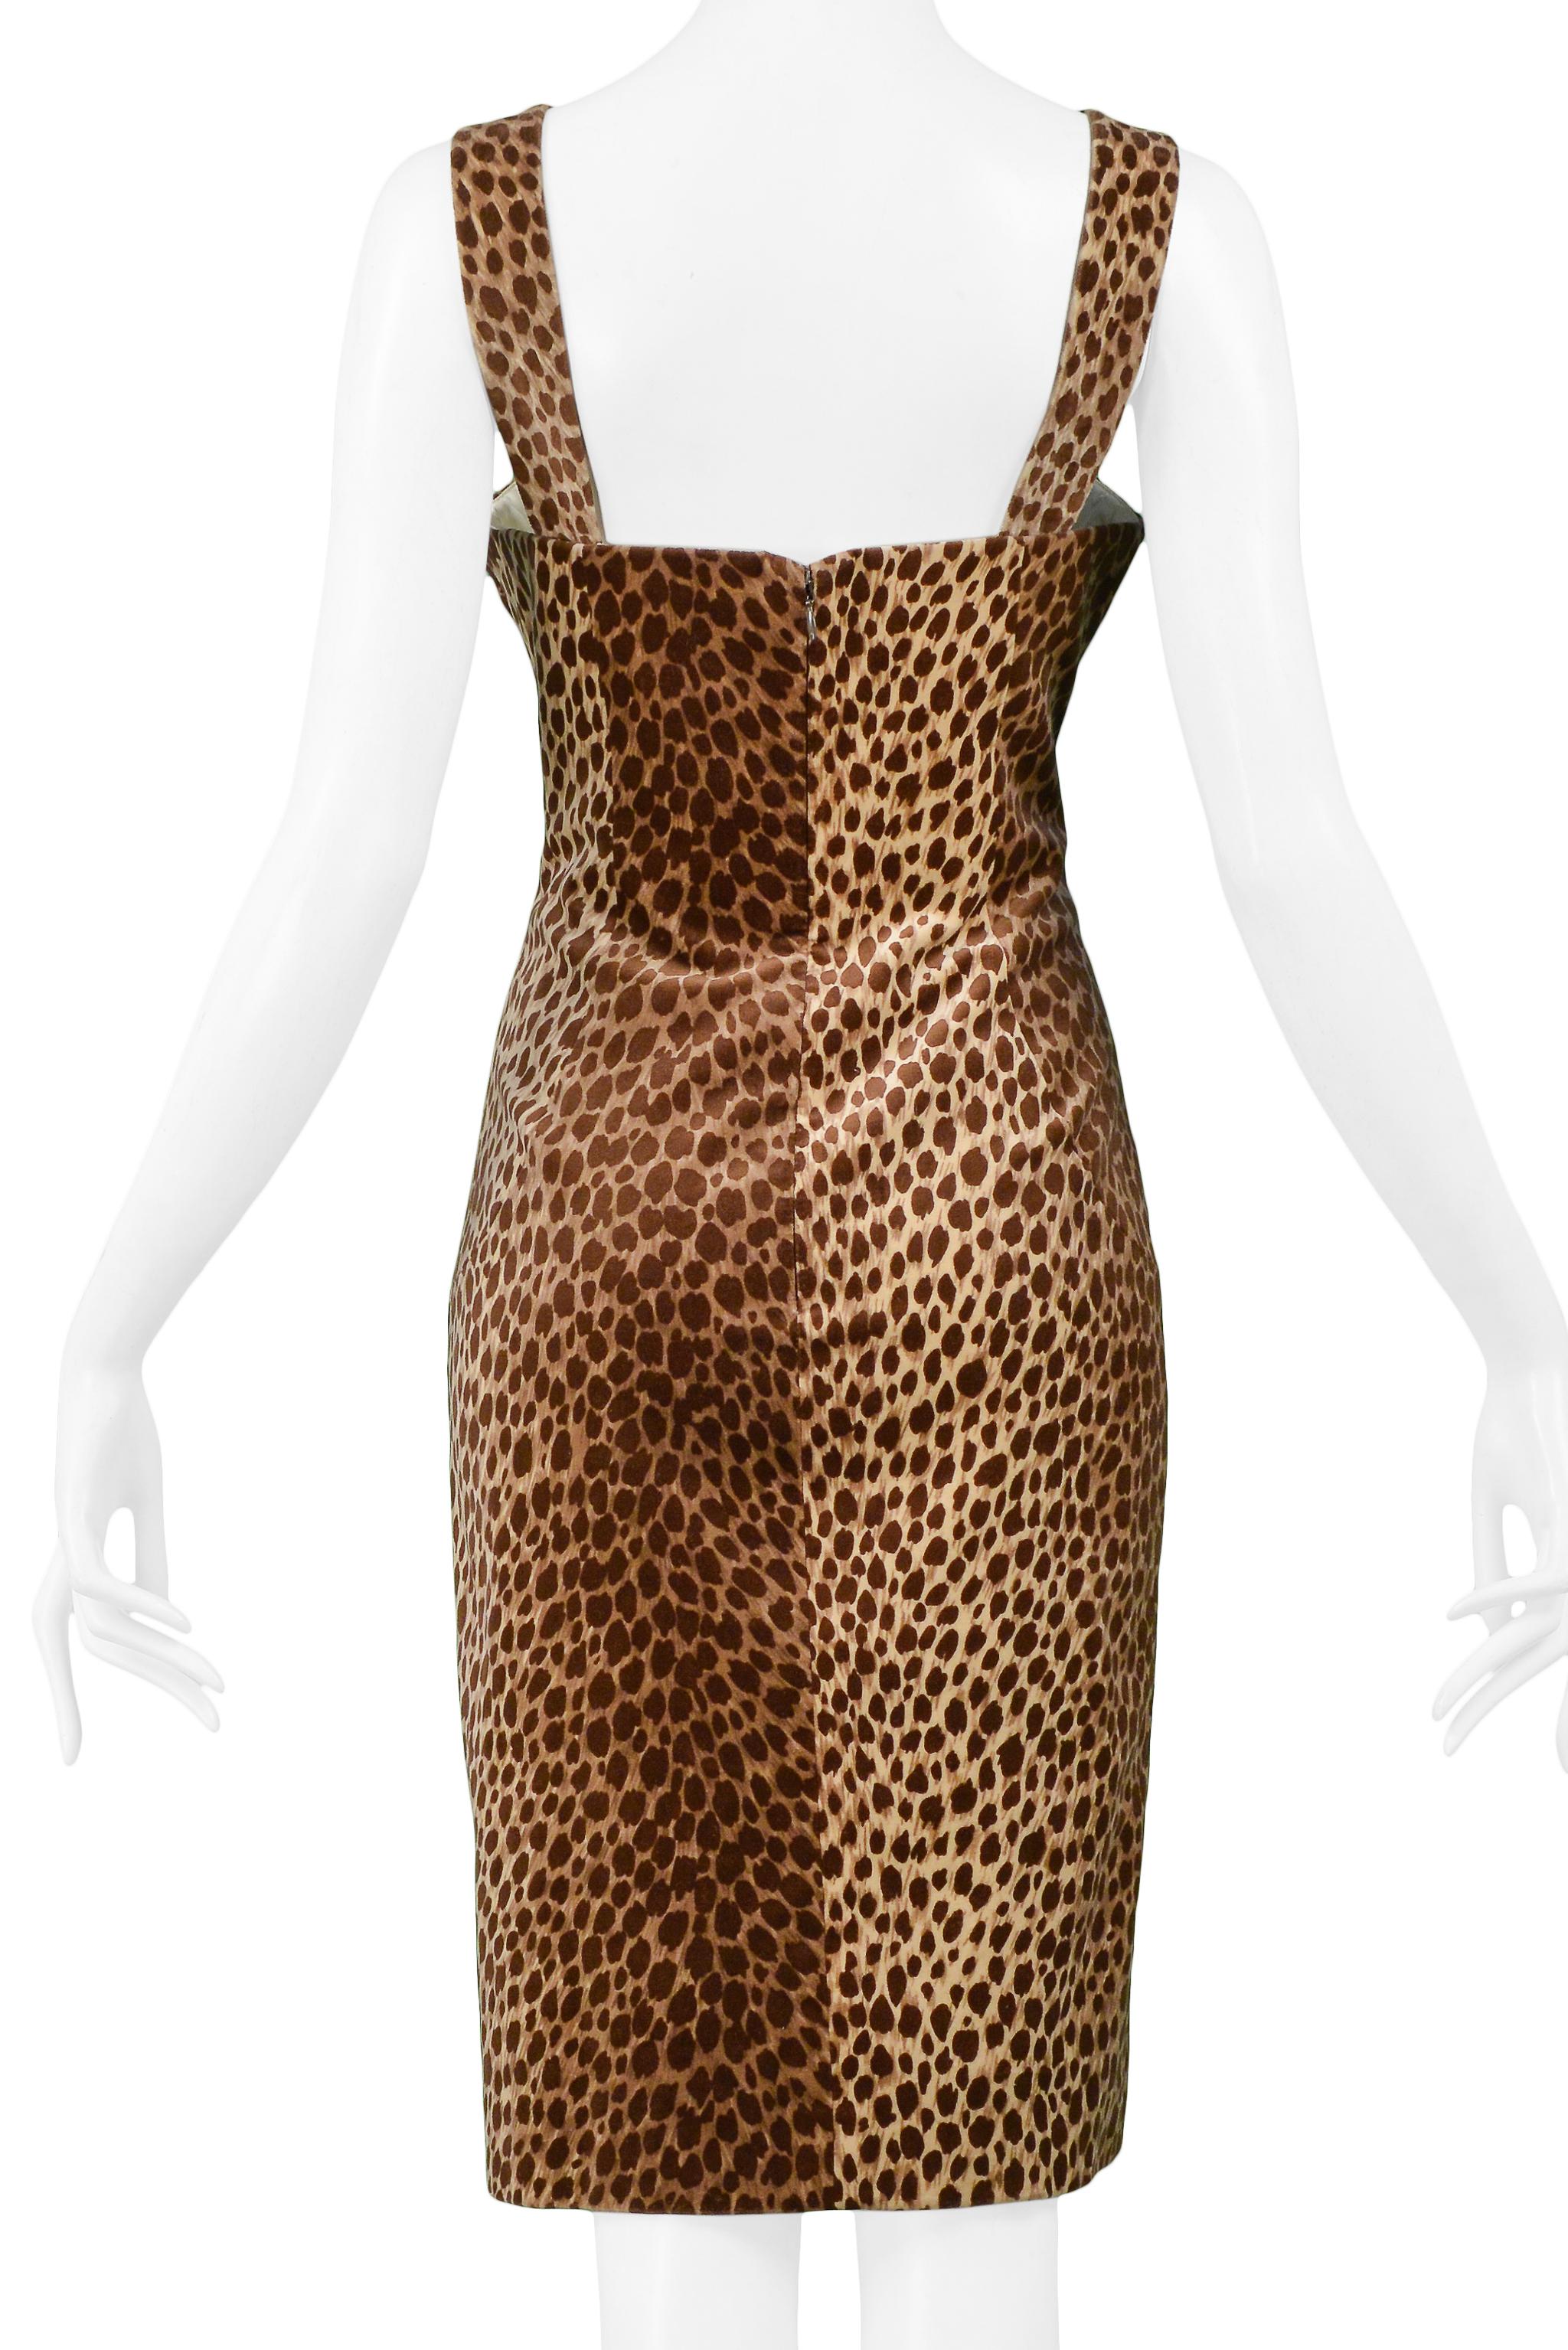 Brown Dolce & Gabbana Cotton Velvet Leopard Print Cocktail Dress 1996-97 